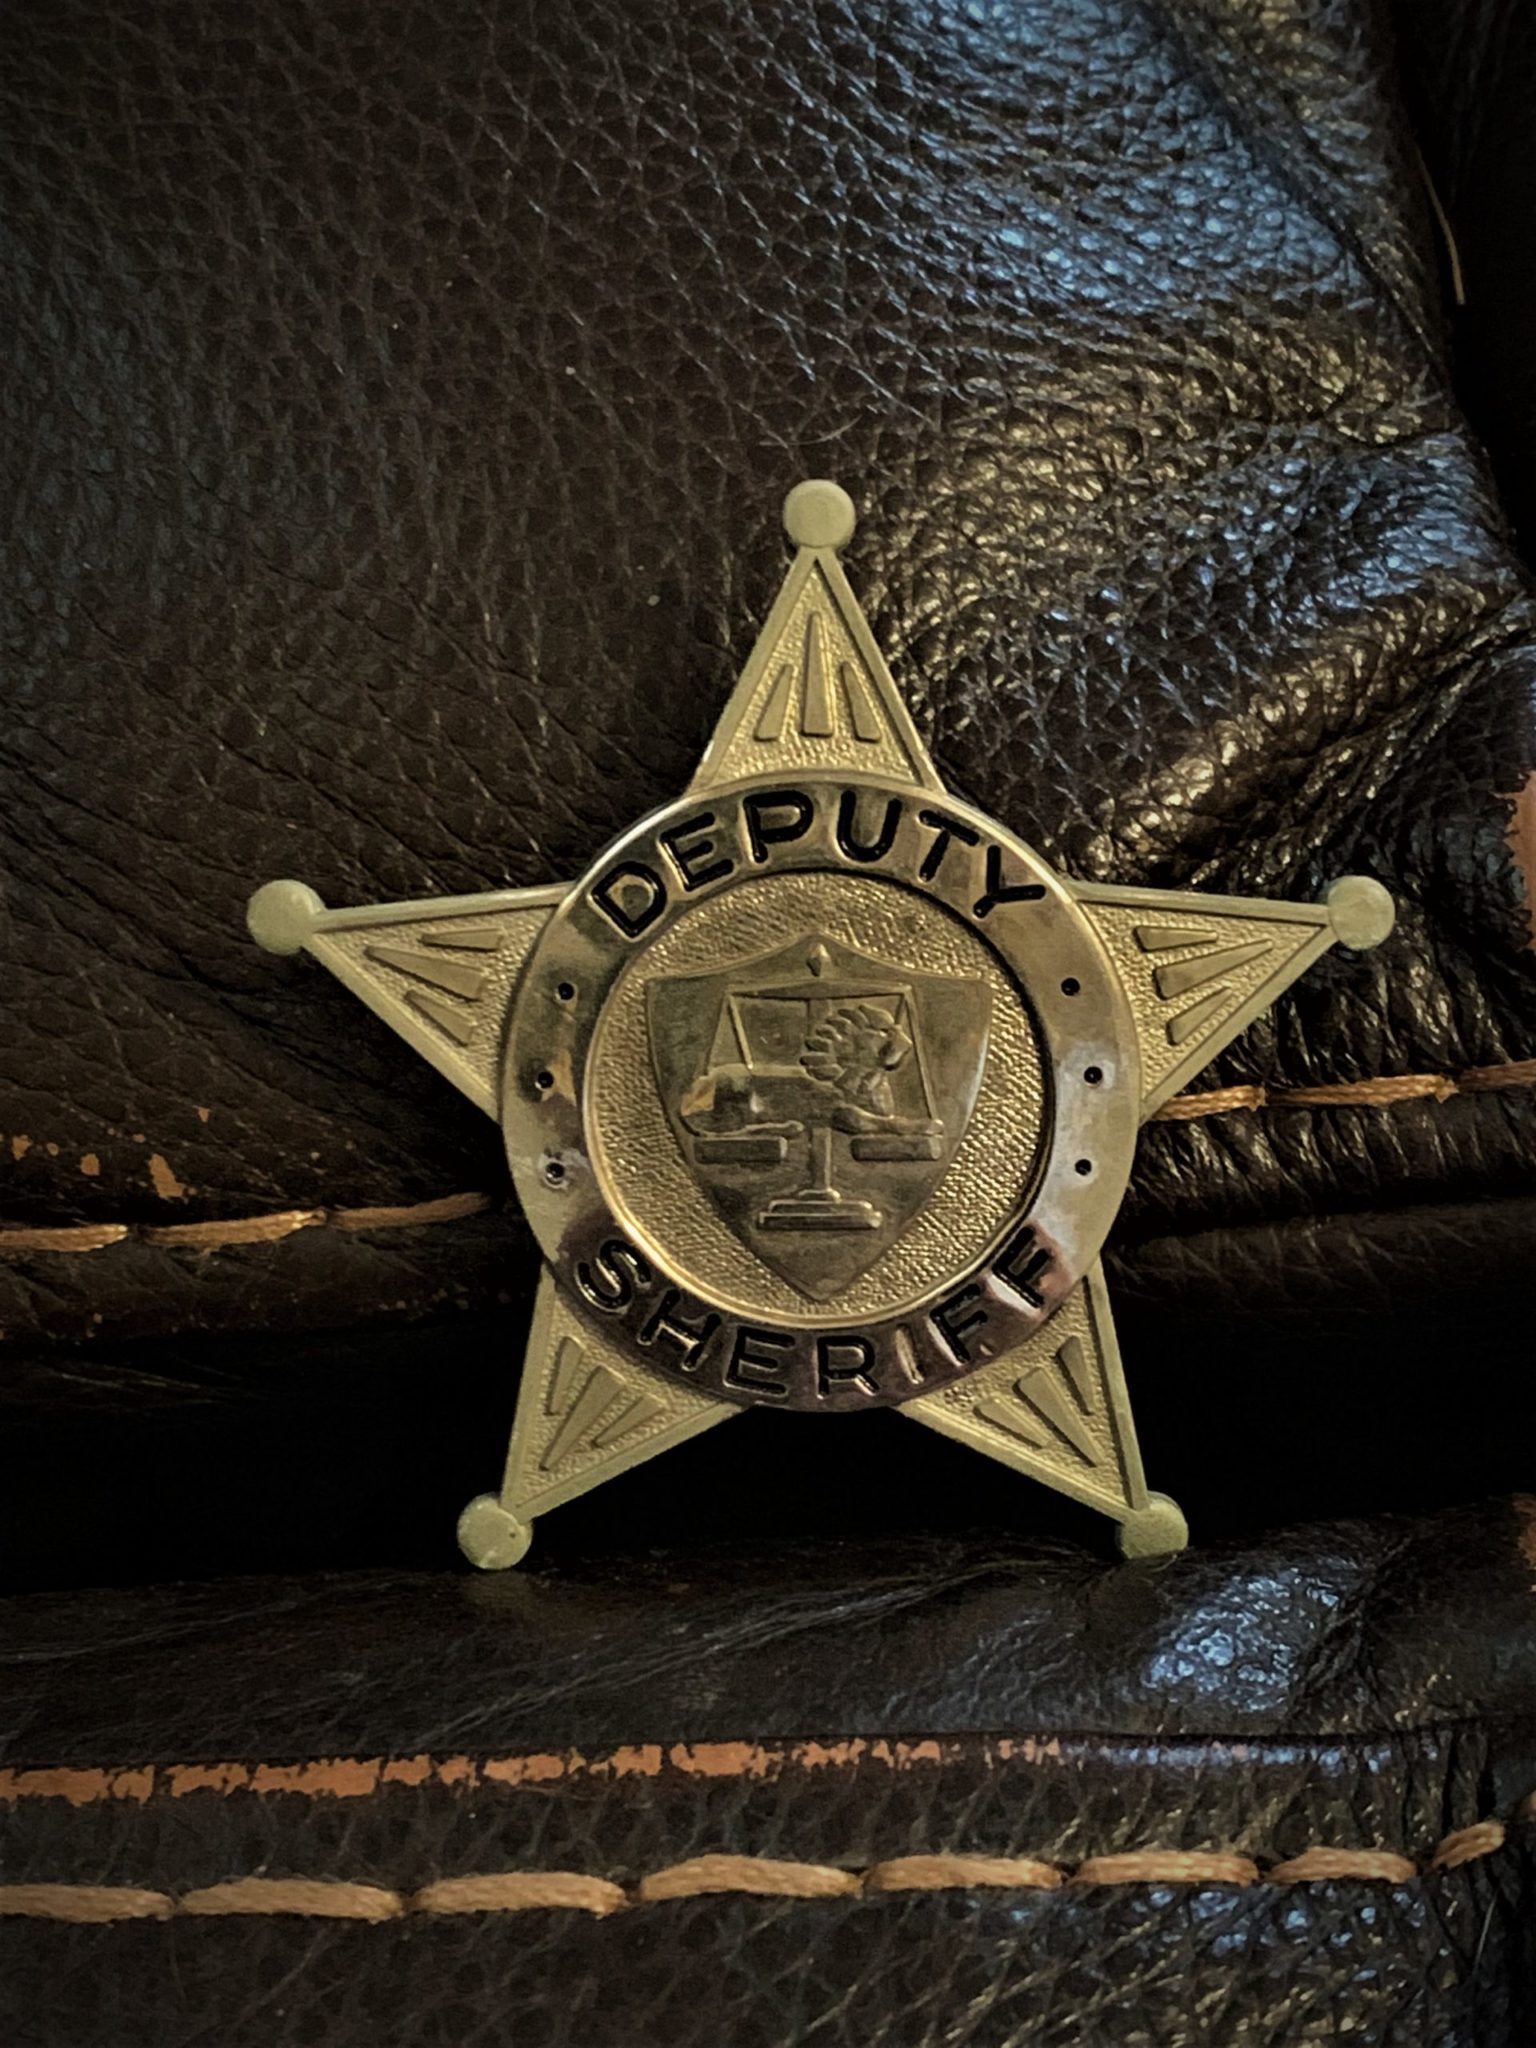 Details about   Vintage Novelty brooch Texas Ranger Sheriff toy badge silver black enamel 